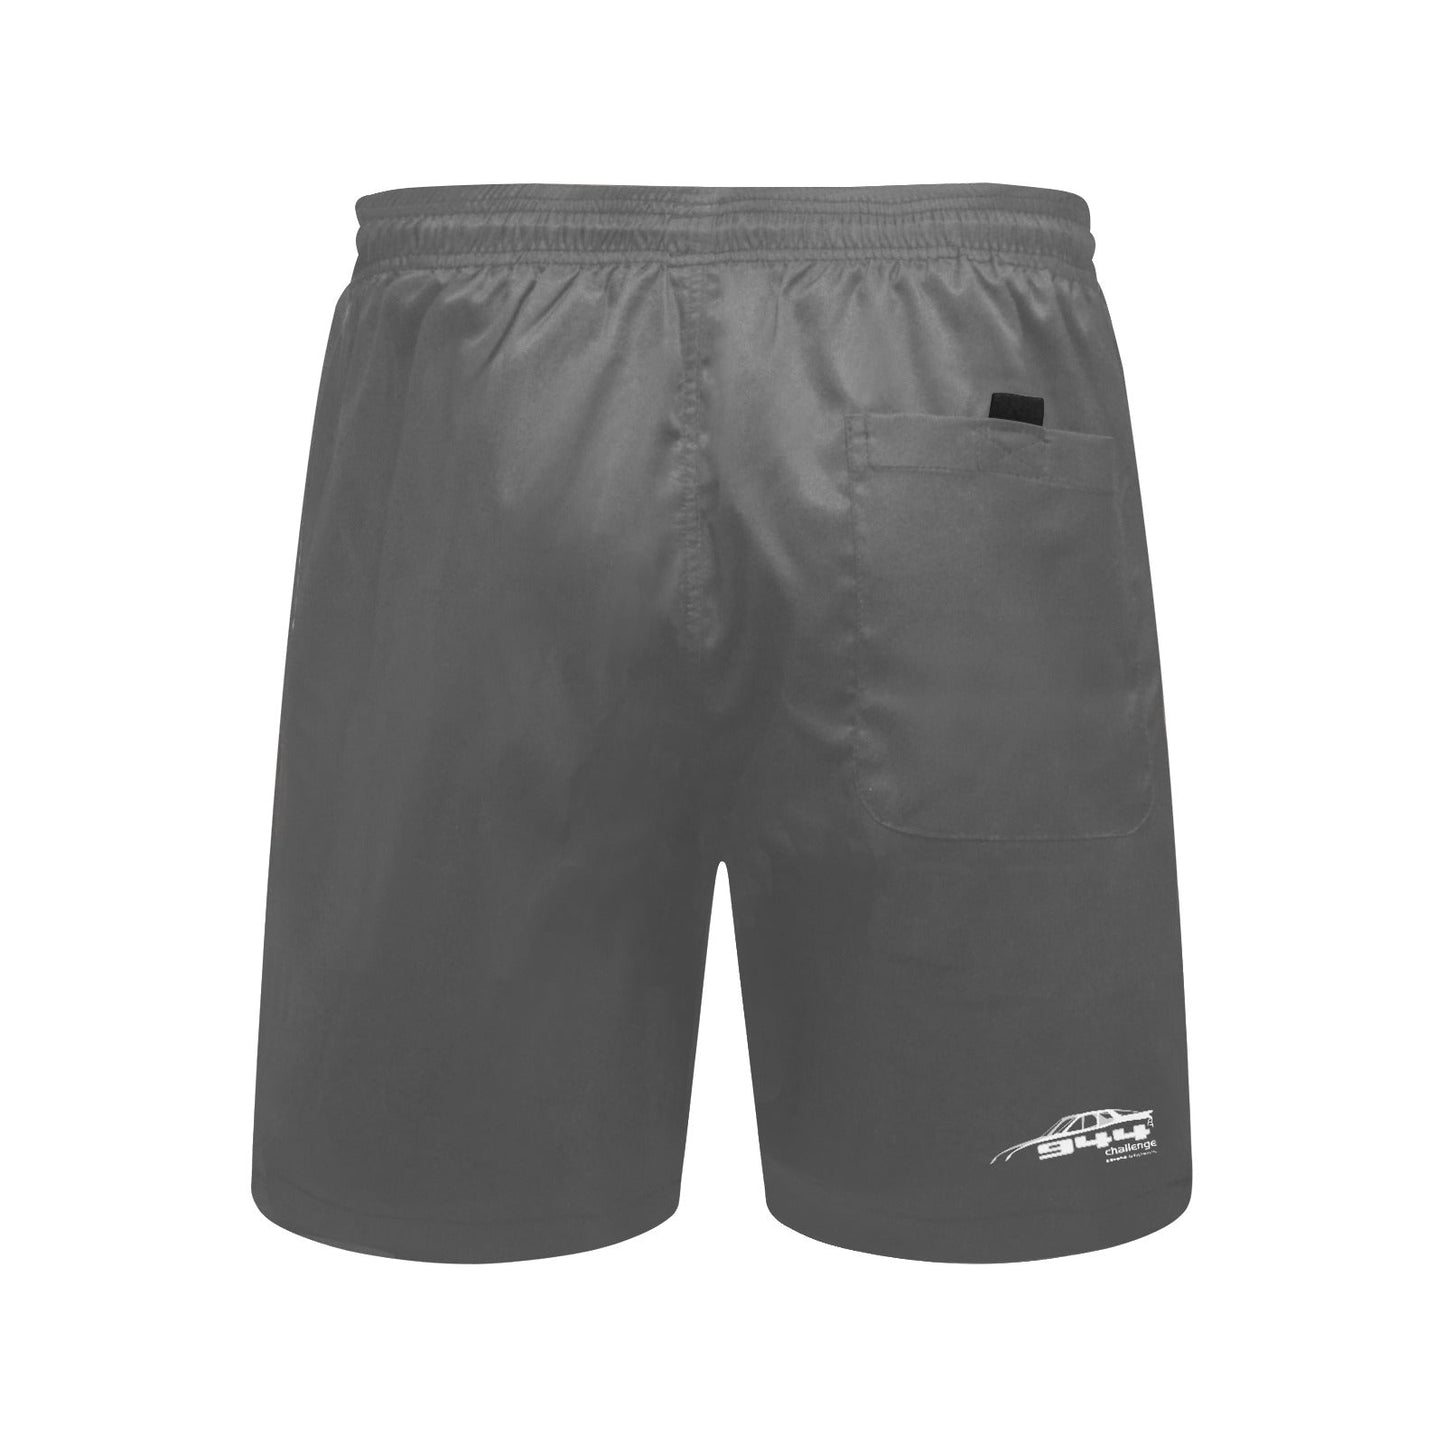 944 CHALLENGE waterproof Shorts - Titanium grey